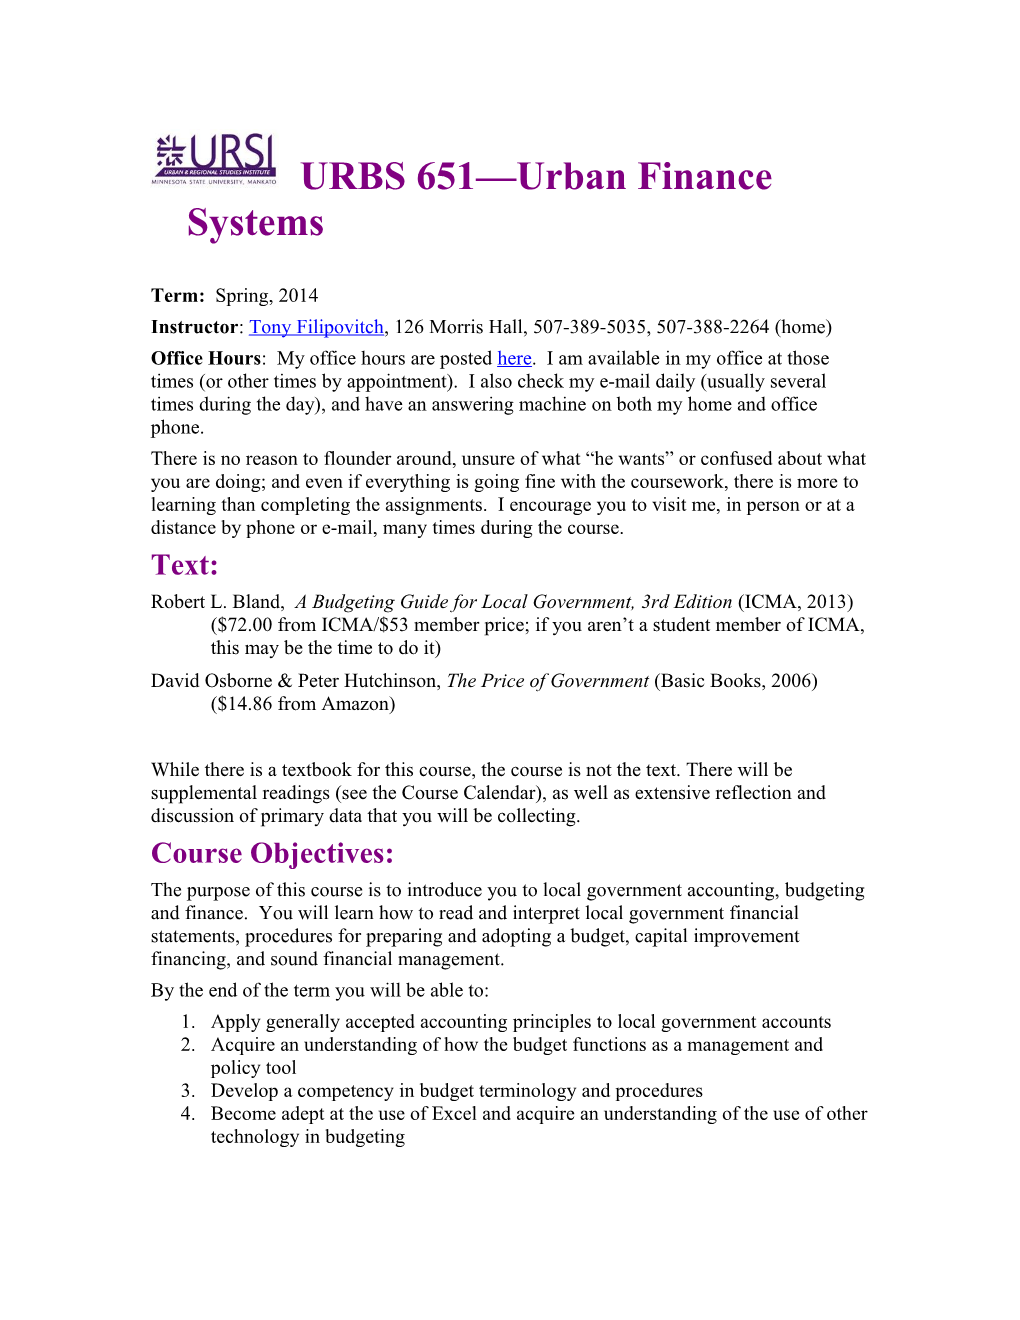 URBS 651 Urban Finance Systems